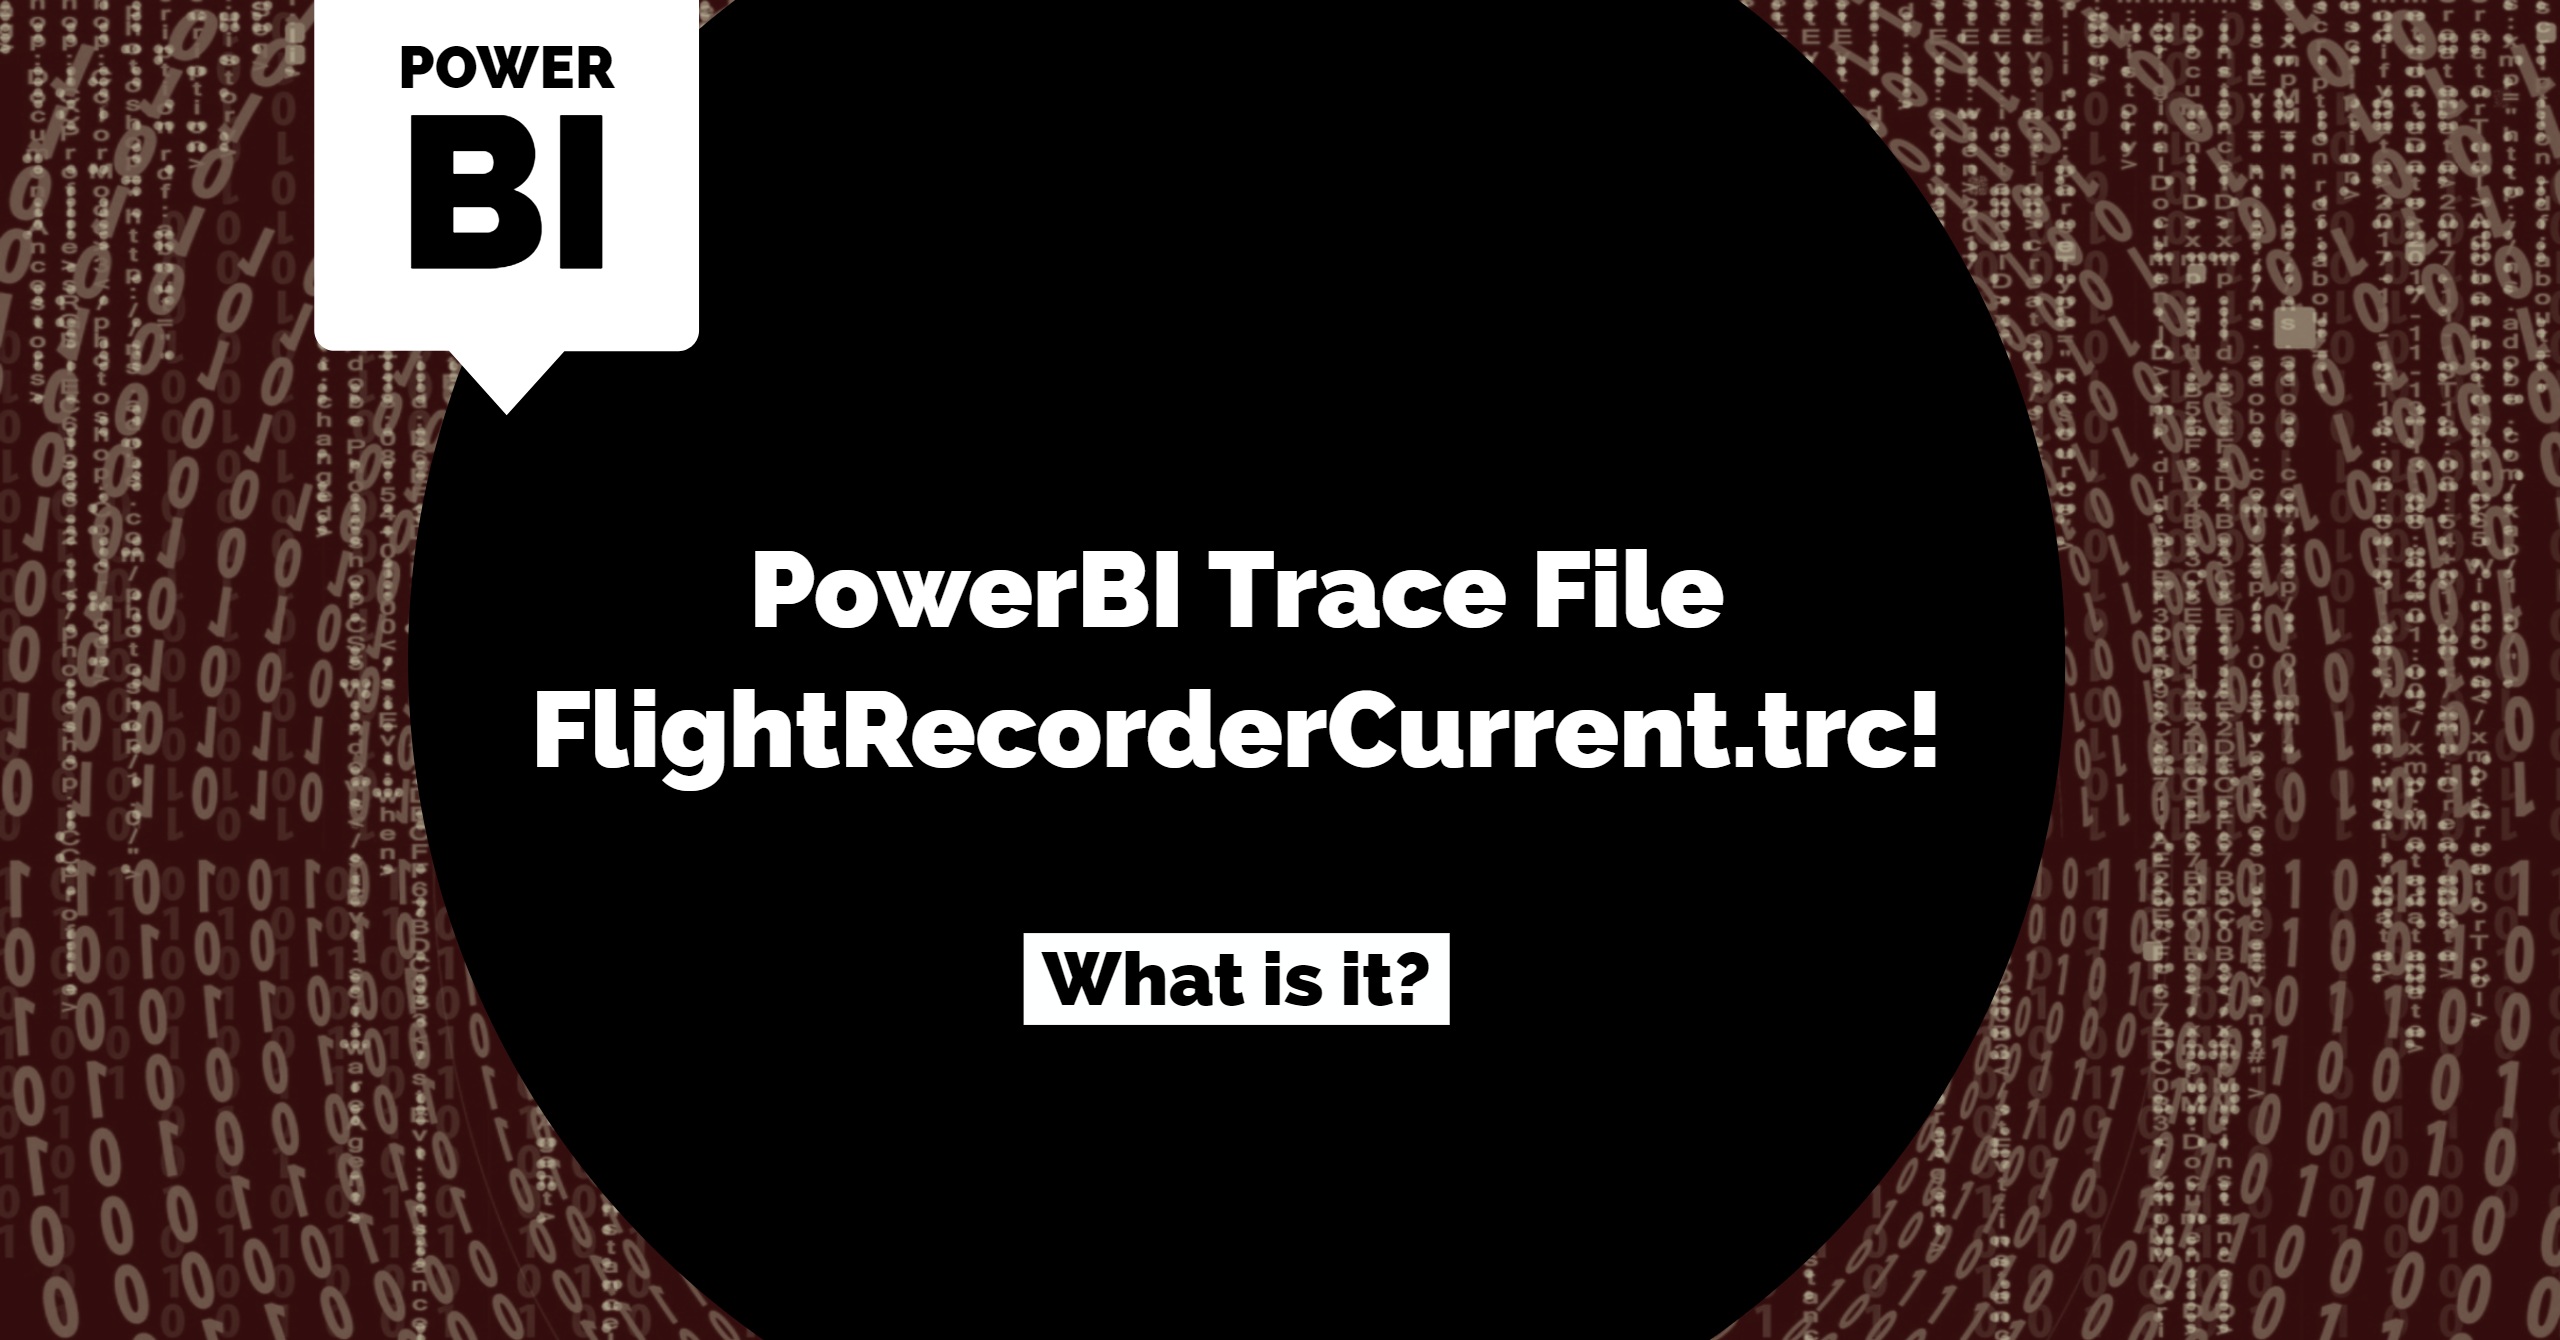 PowerBI Trace File FlightRecorderCurrent.trc